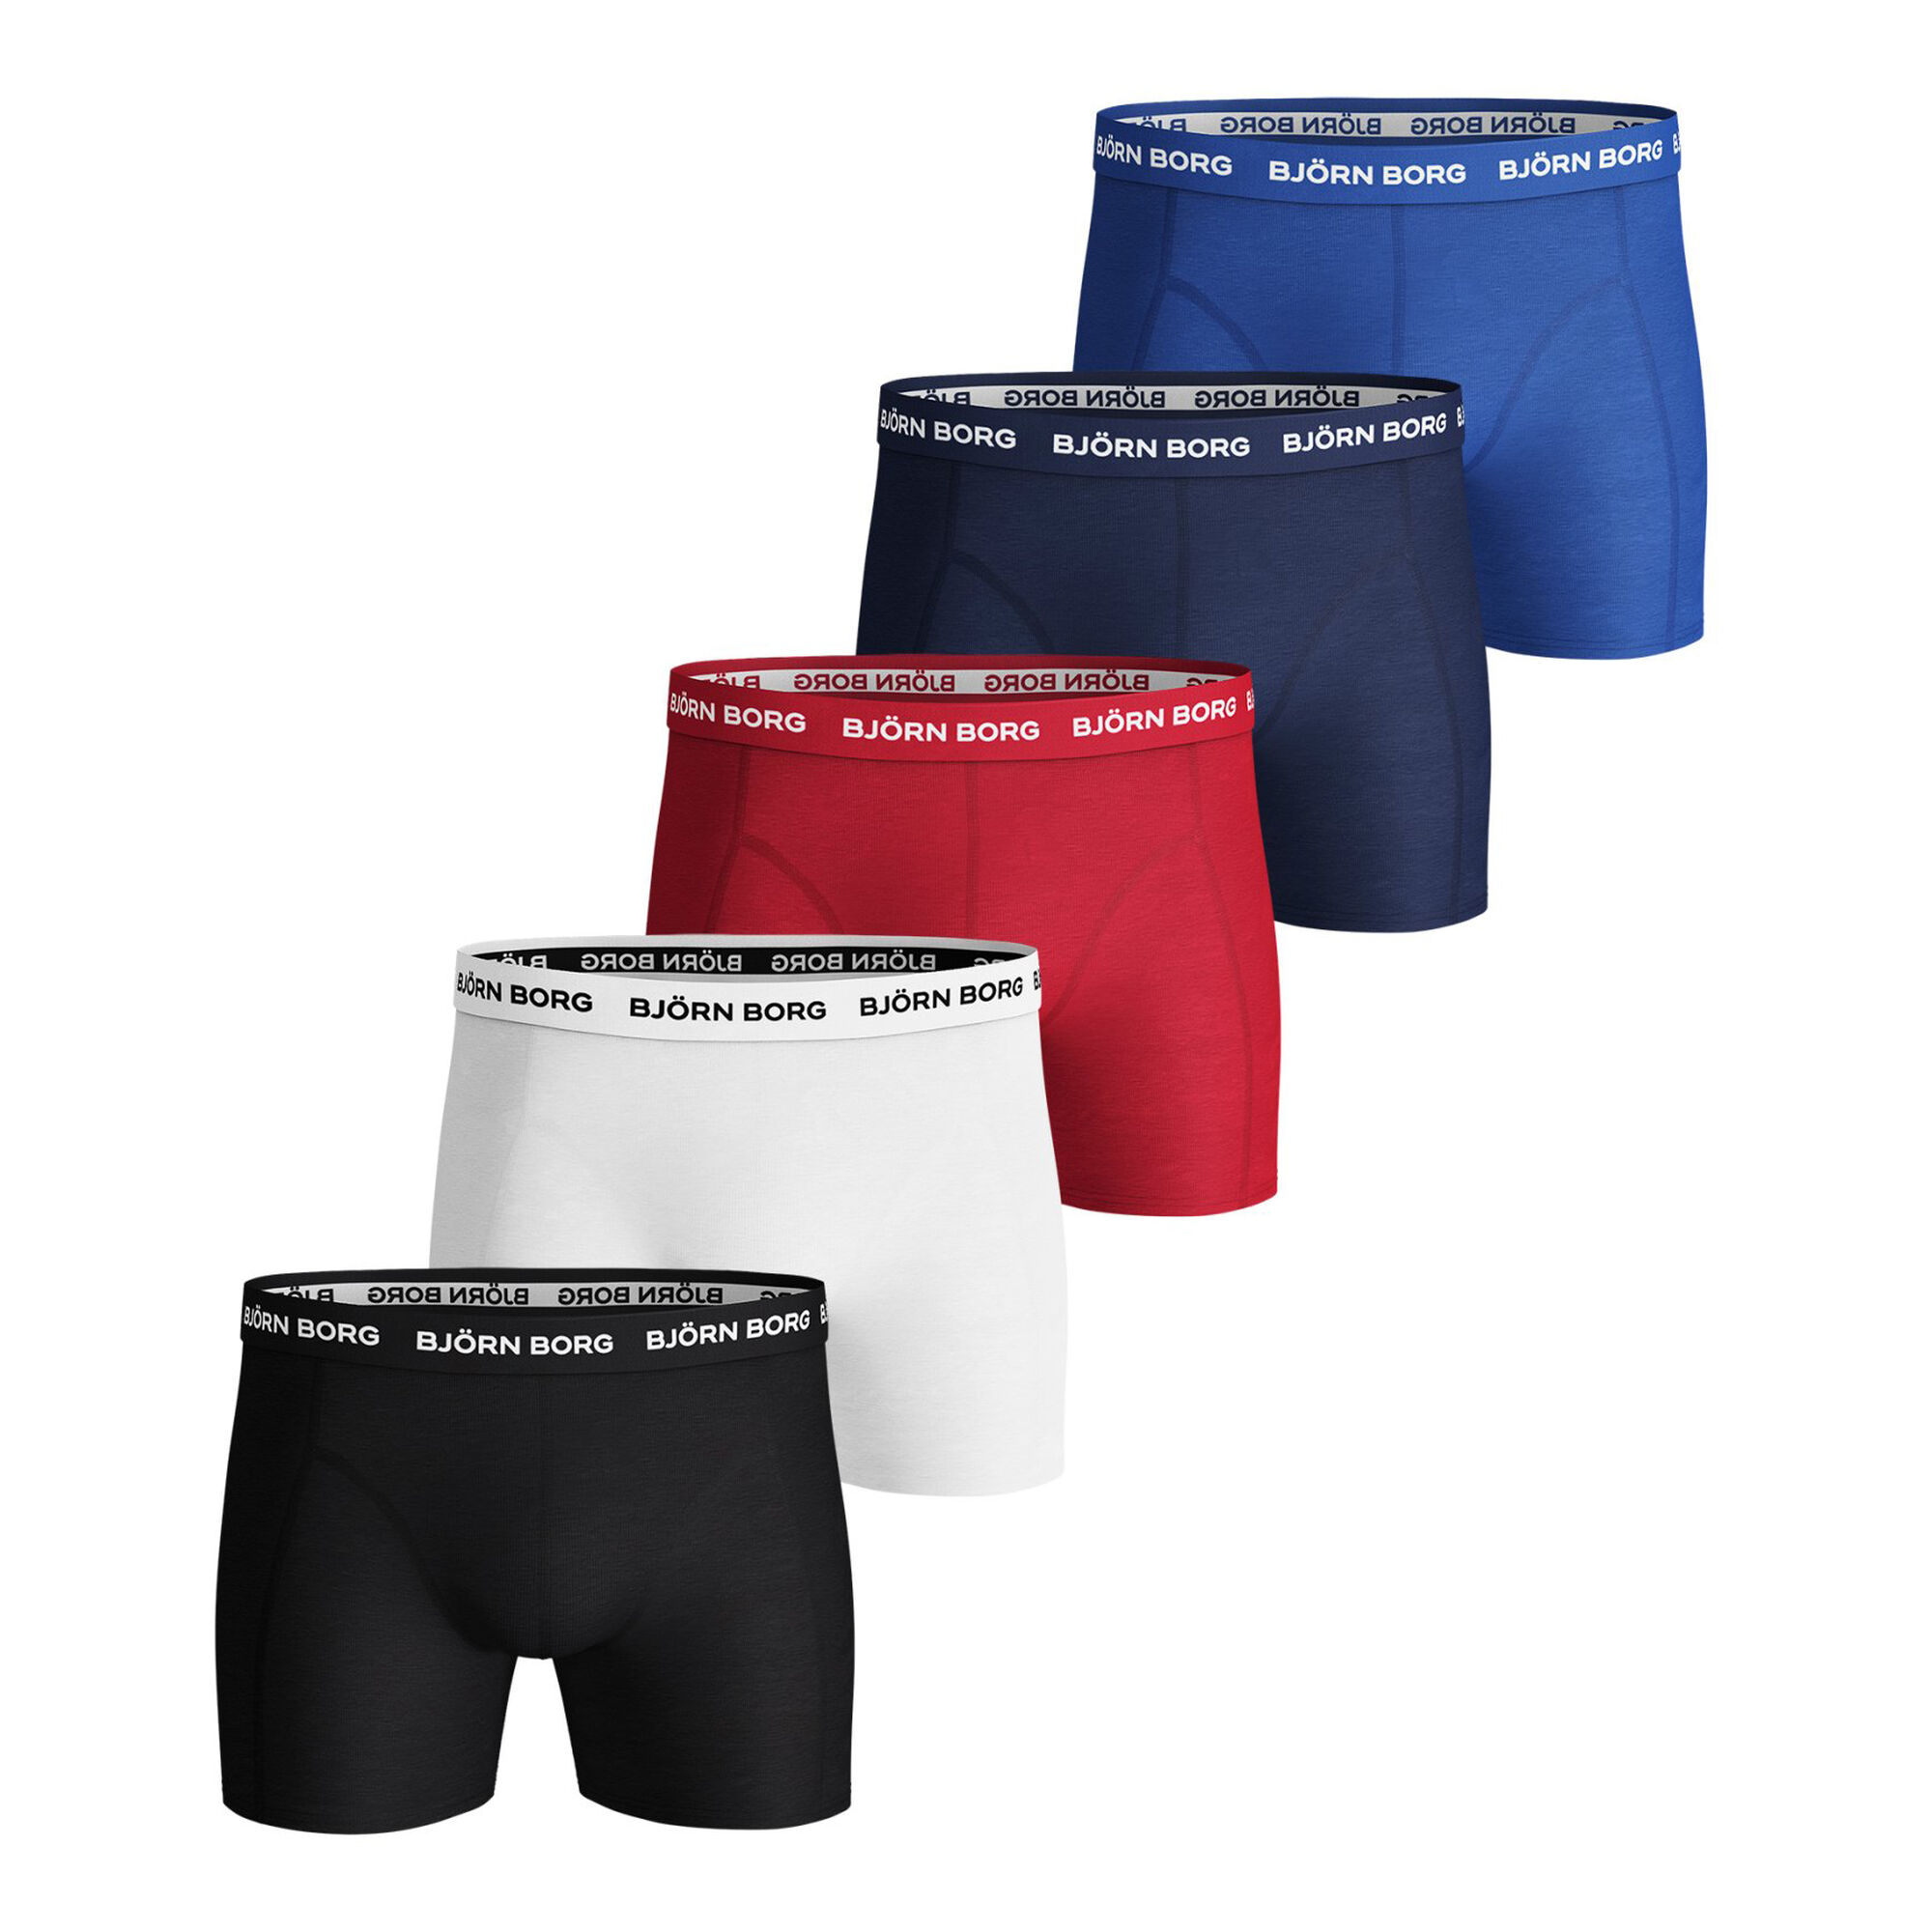 Solid Sammy Boxer Shorts 5 Pack Men - Black, White